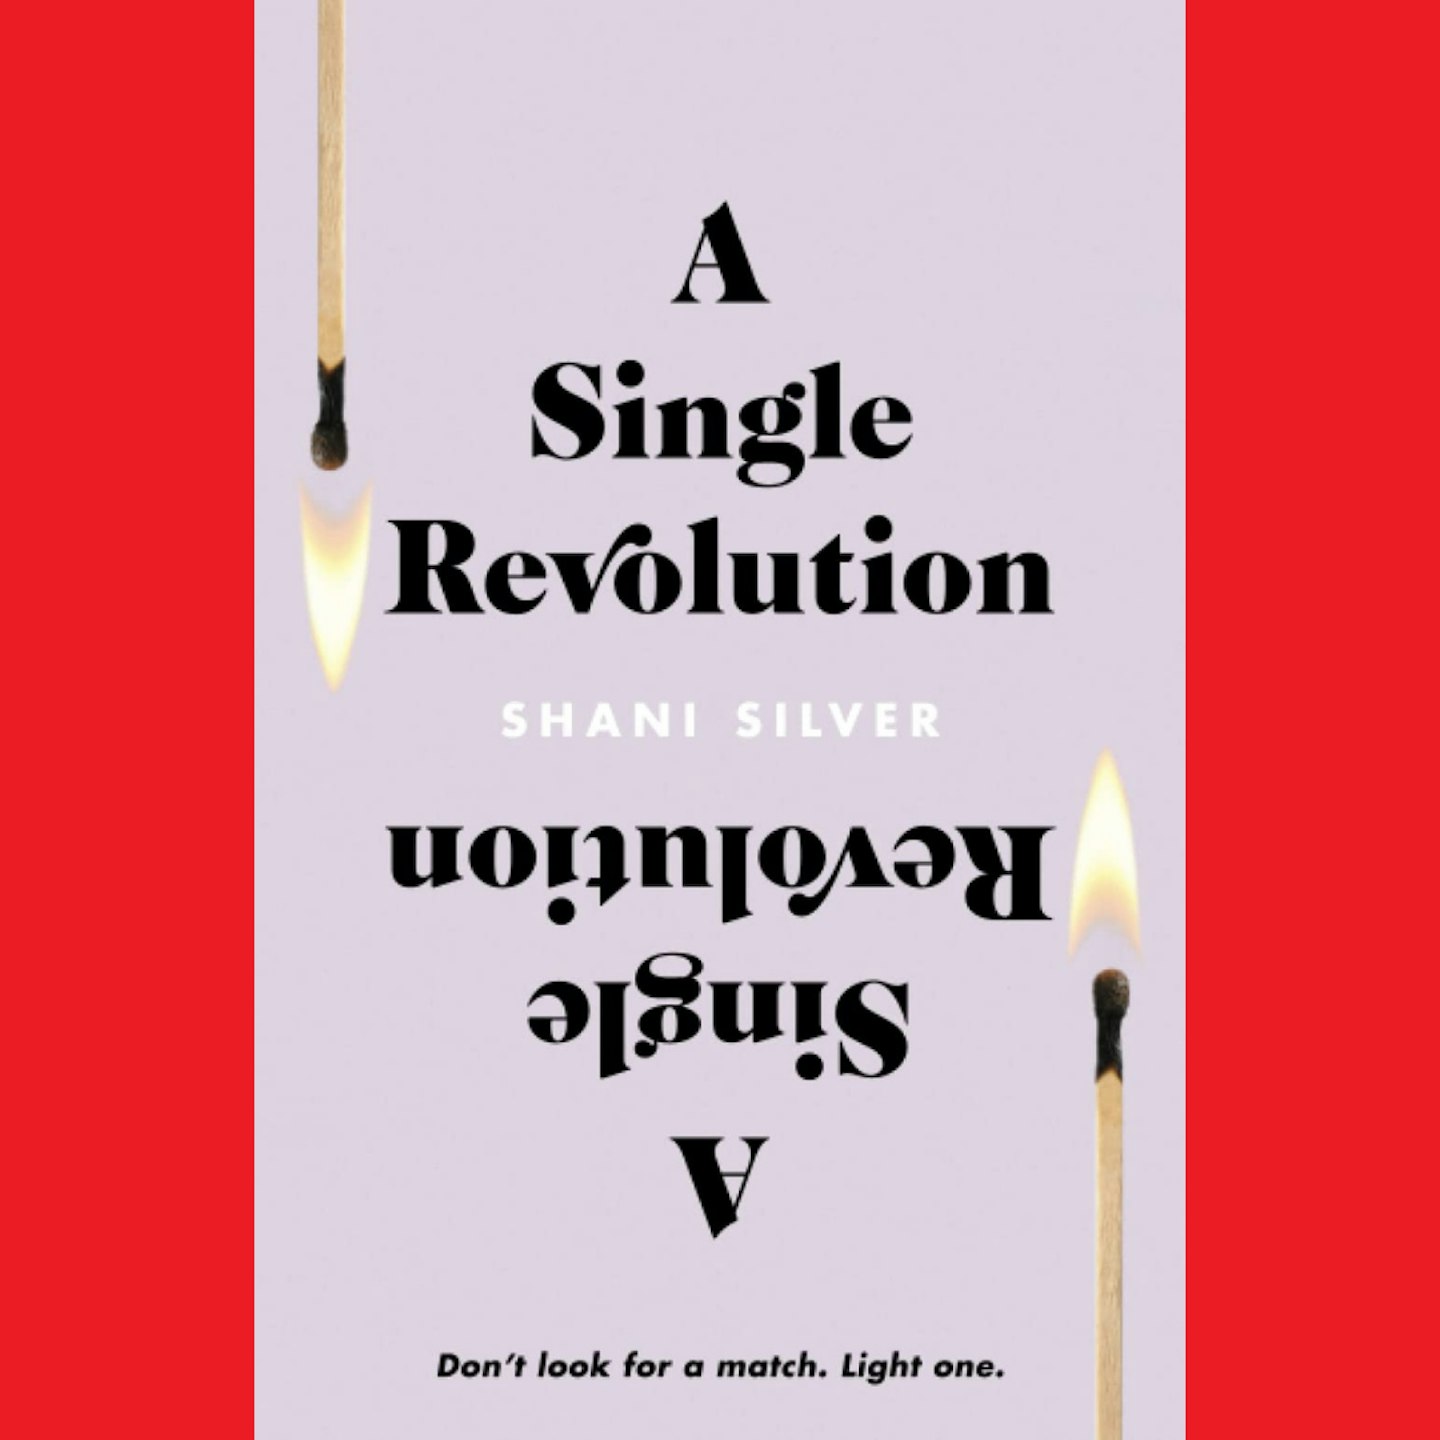 #BookTok A Single Revolution by Shani Silver